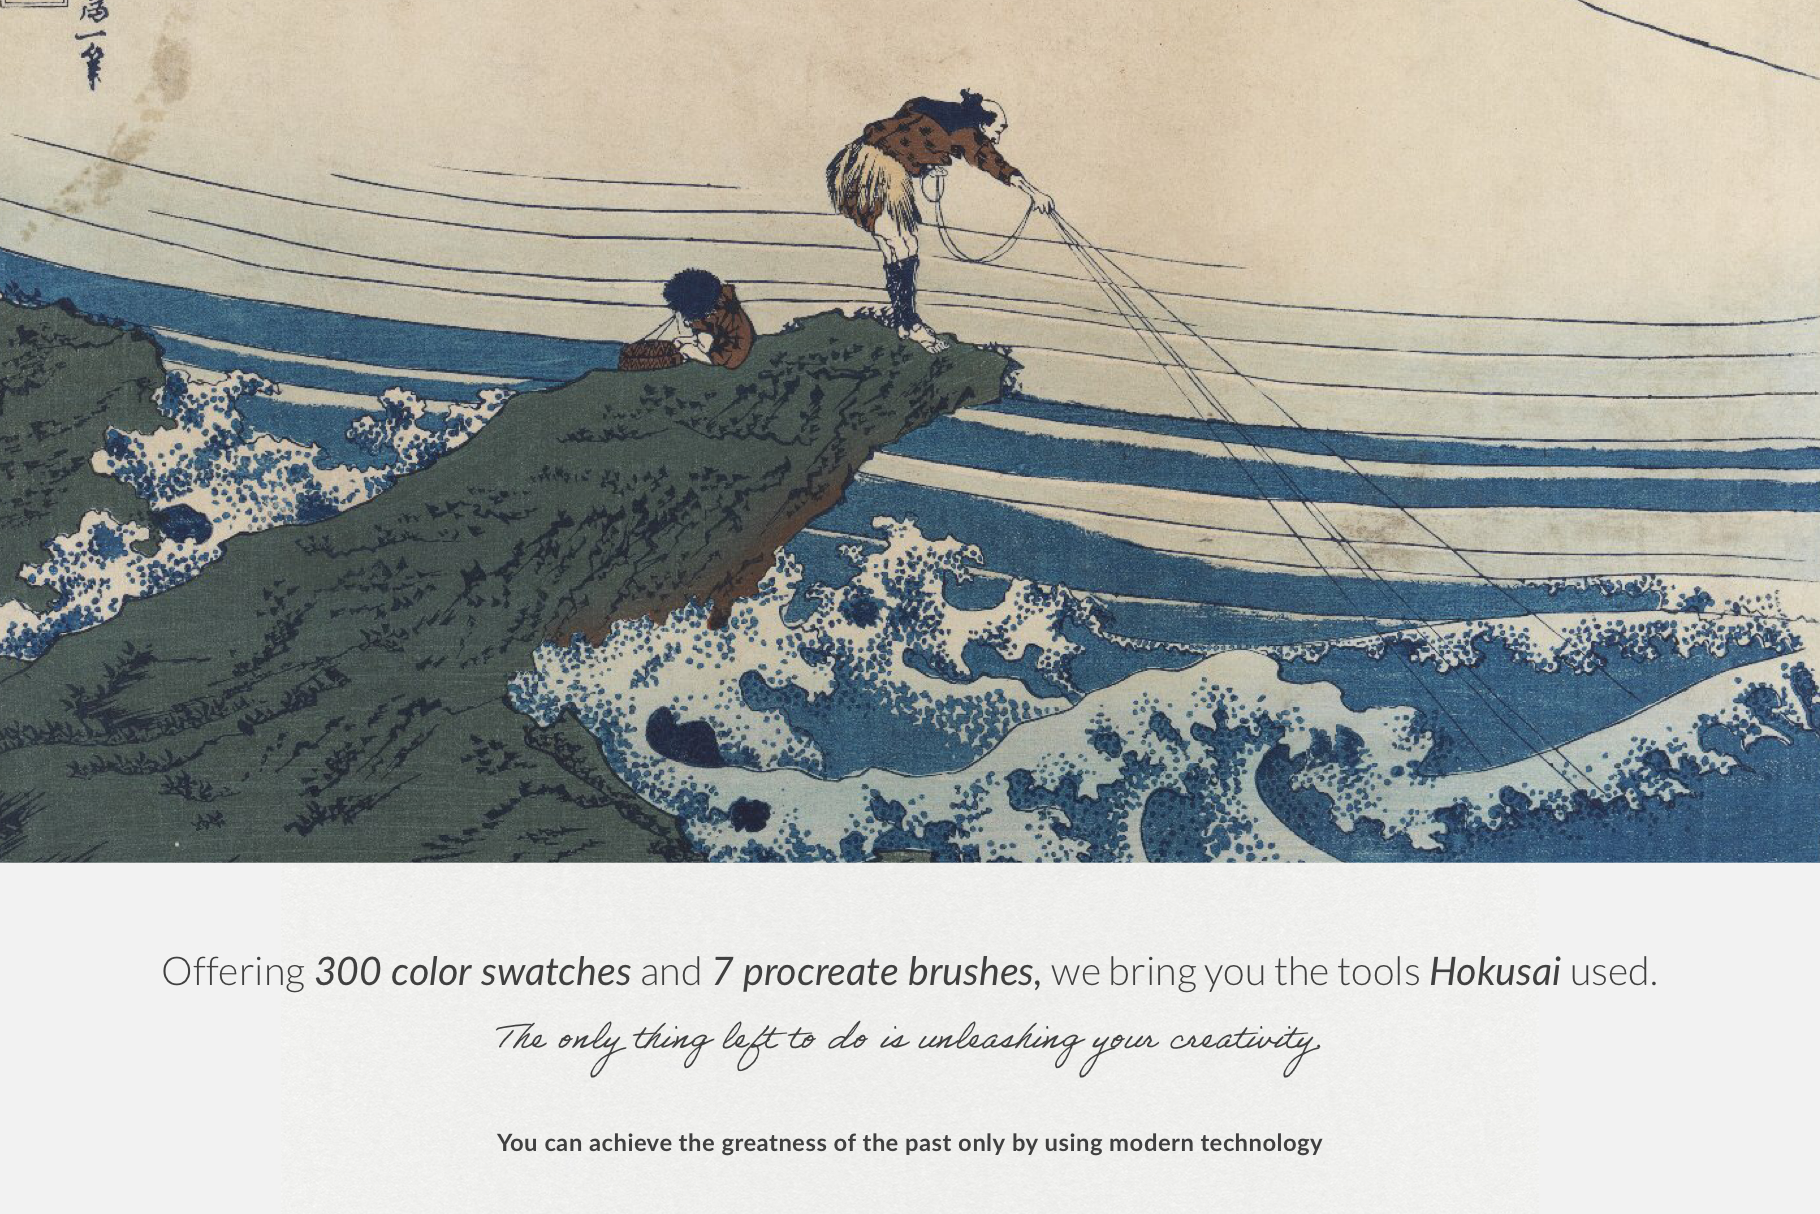 Hokusai Procreate Brushes & Color Swatches